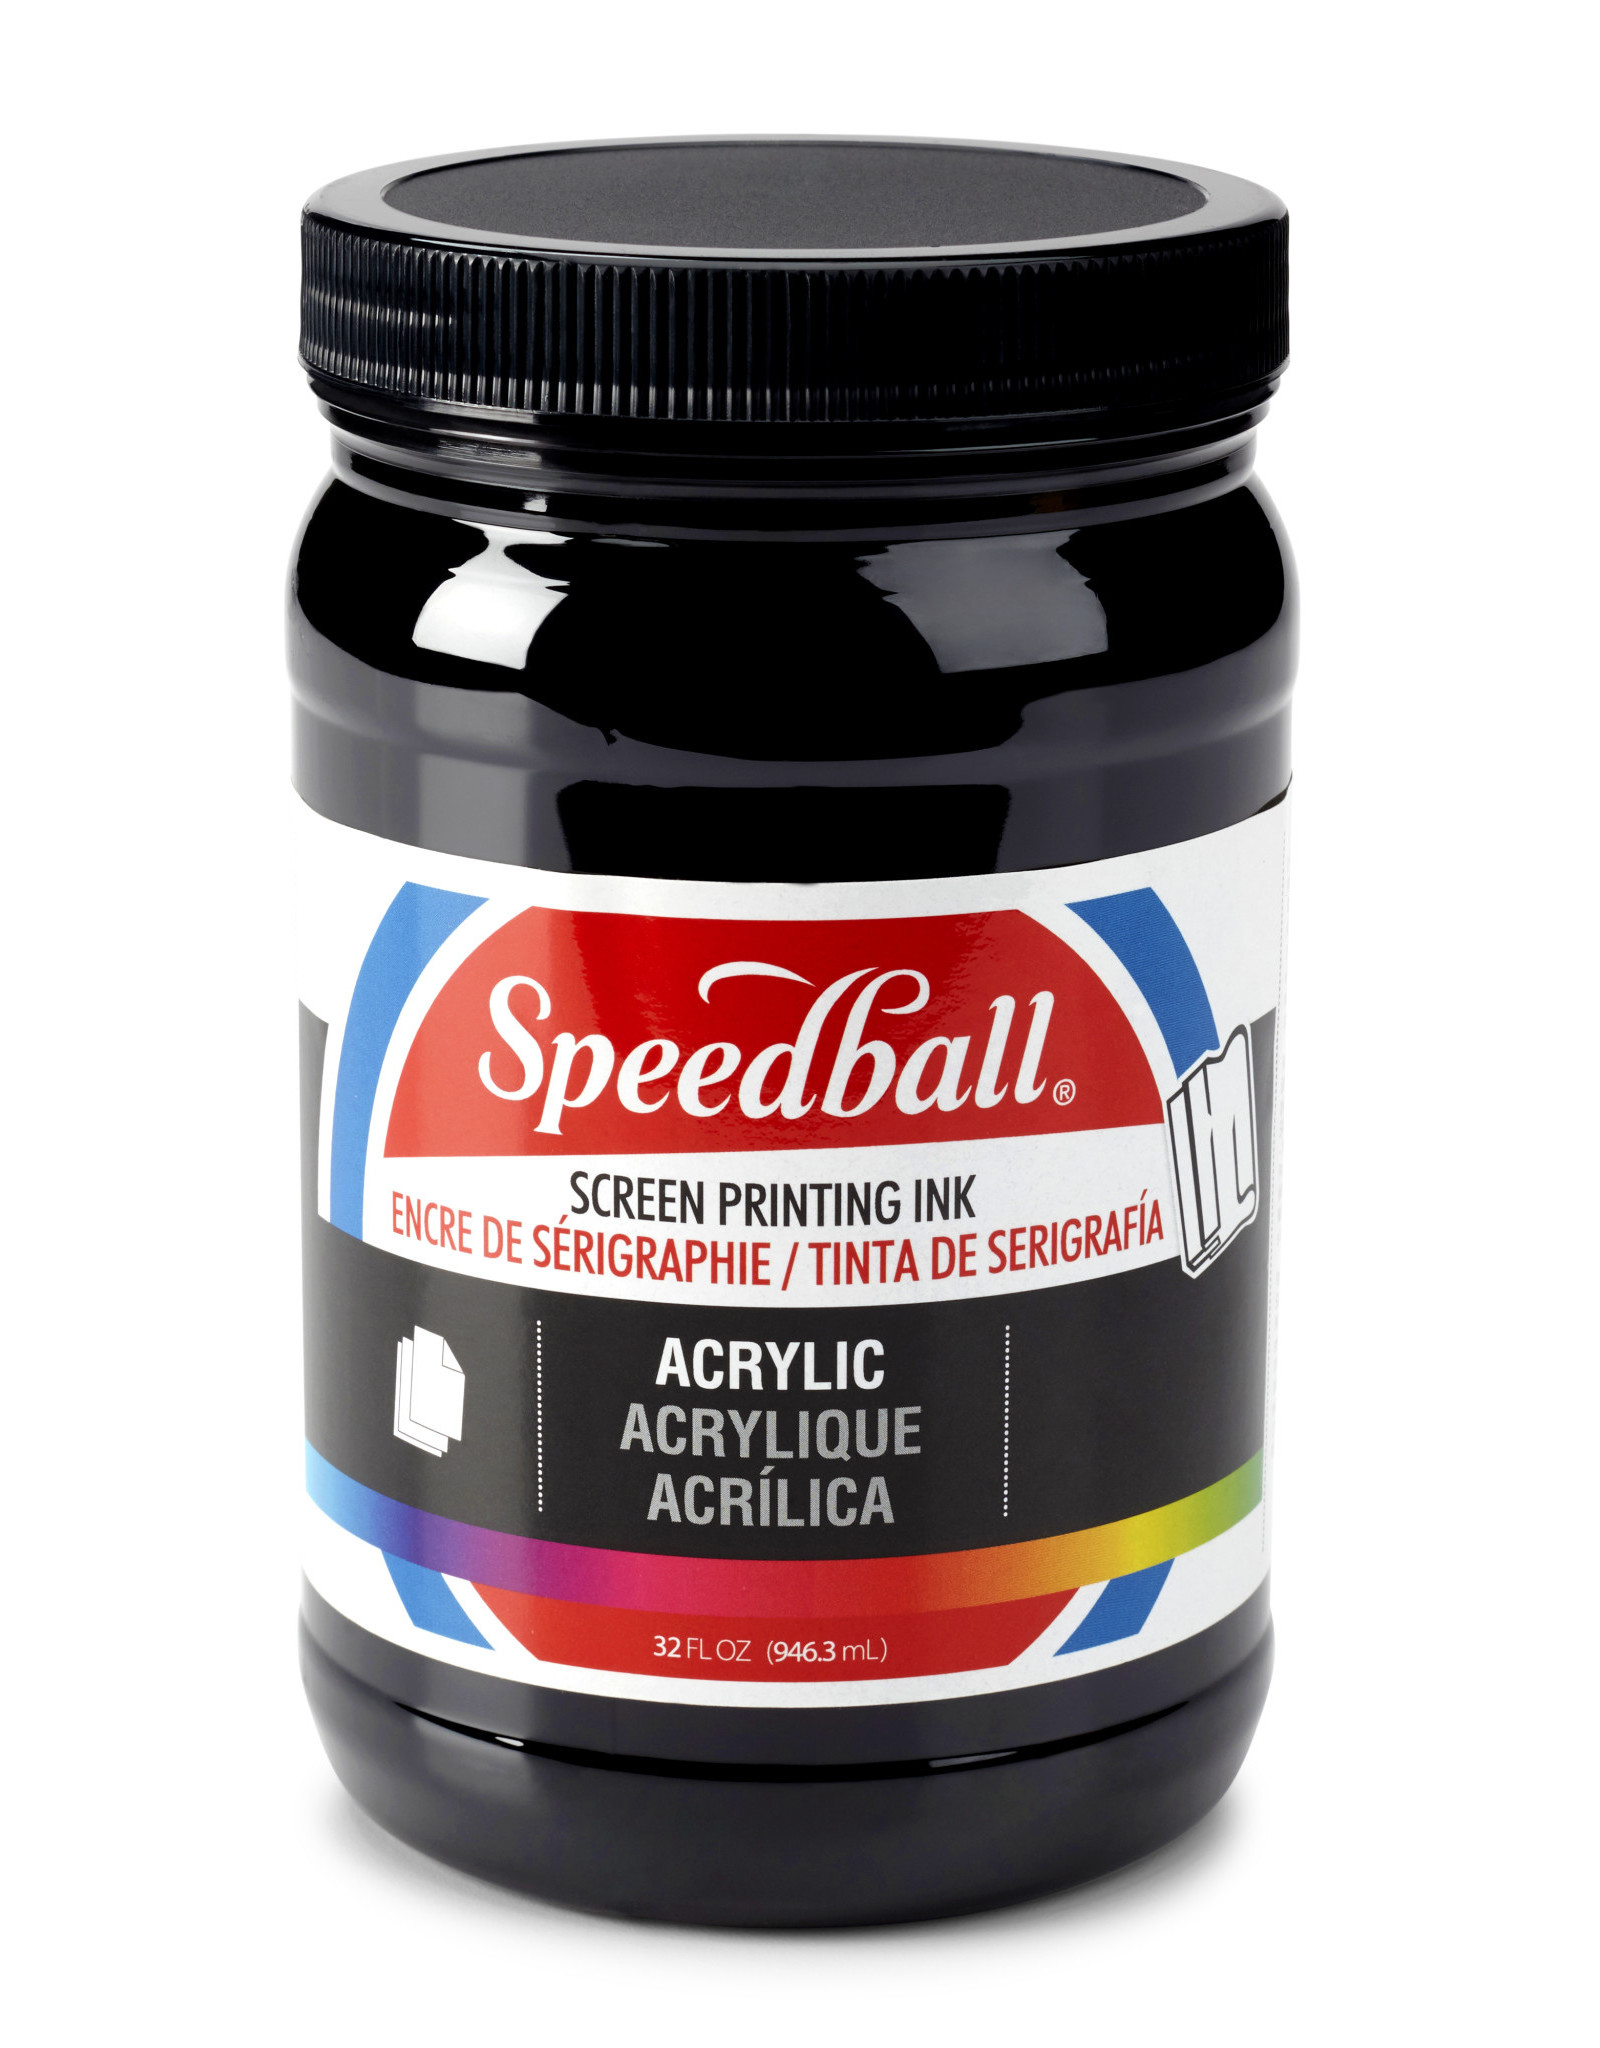 SPEEDBALL ART PRODUCTS Speedball Acrylic Screen Printing Ink, Black, 32oz